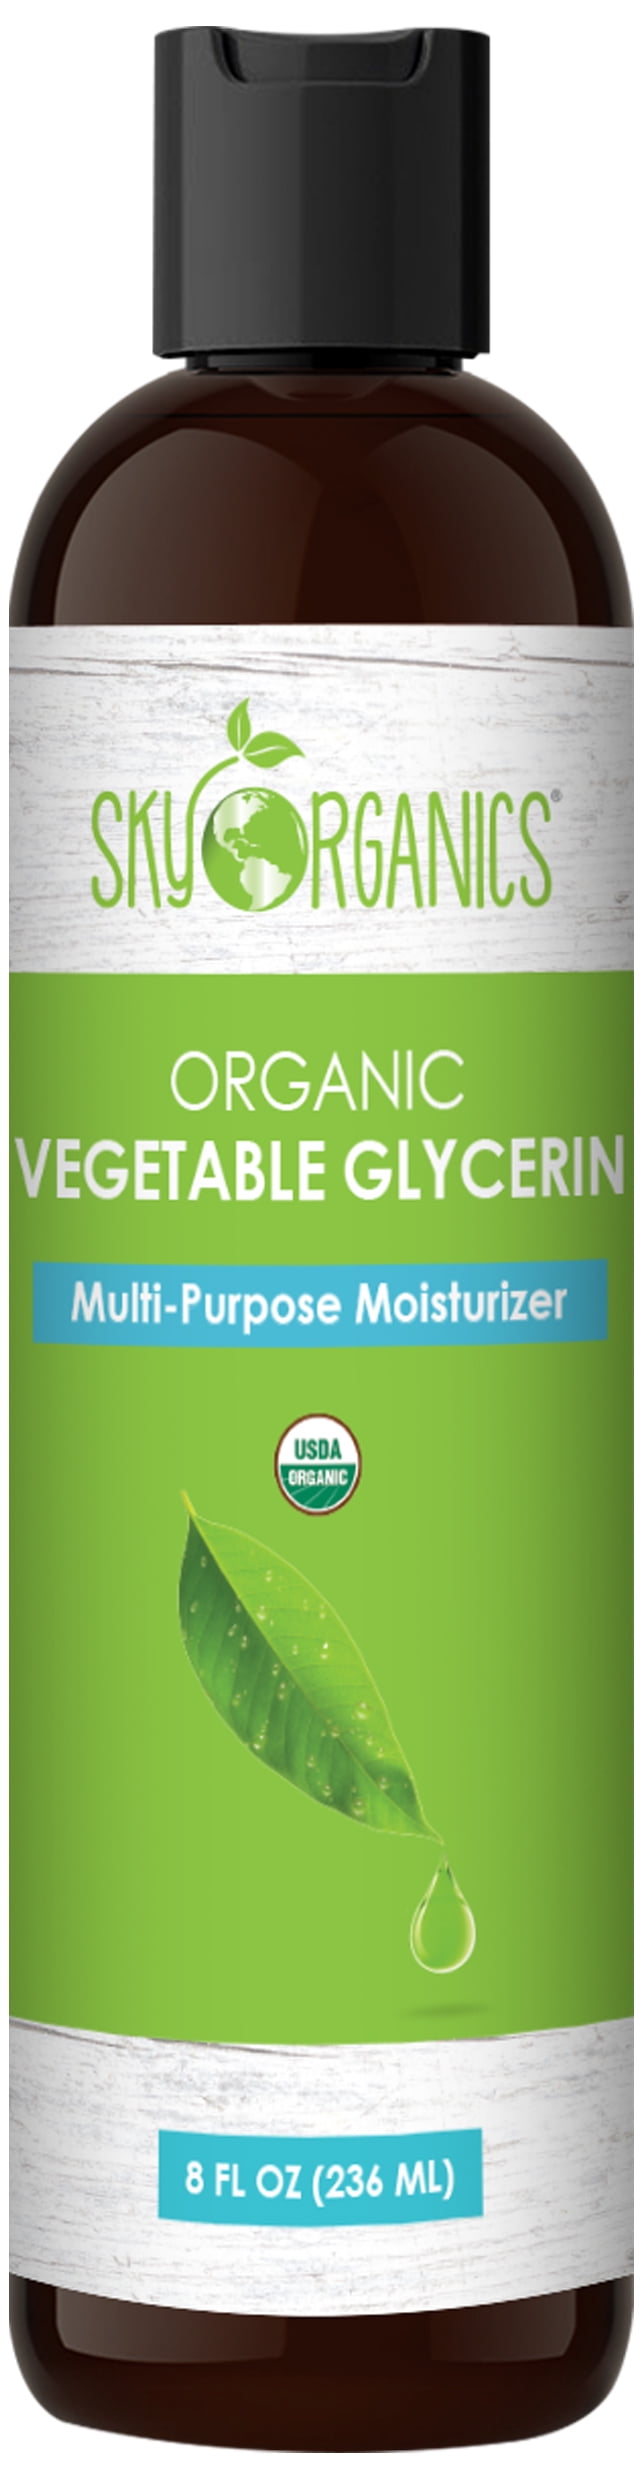 Sky Organics Organic Vegetable Glycerin 8 fl oz (236 ml)